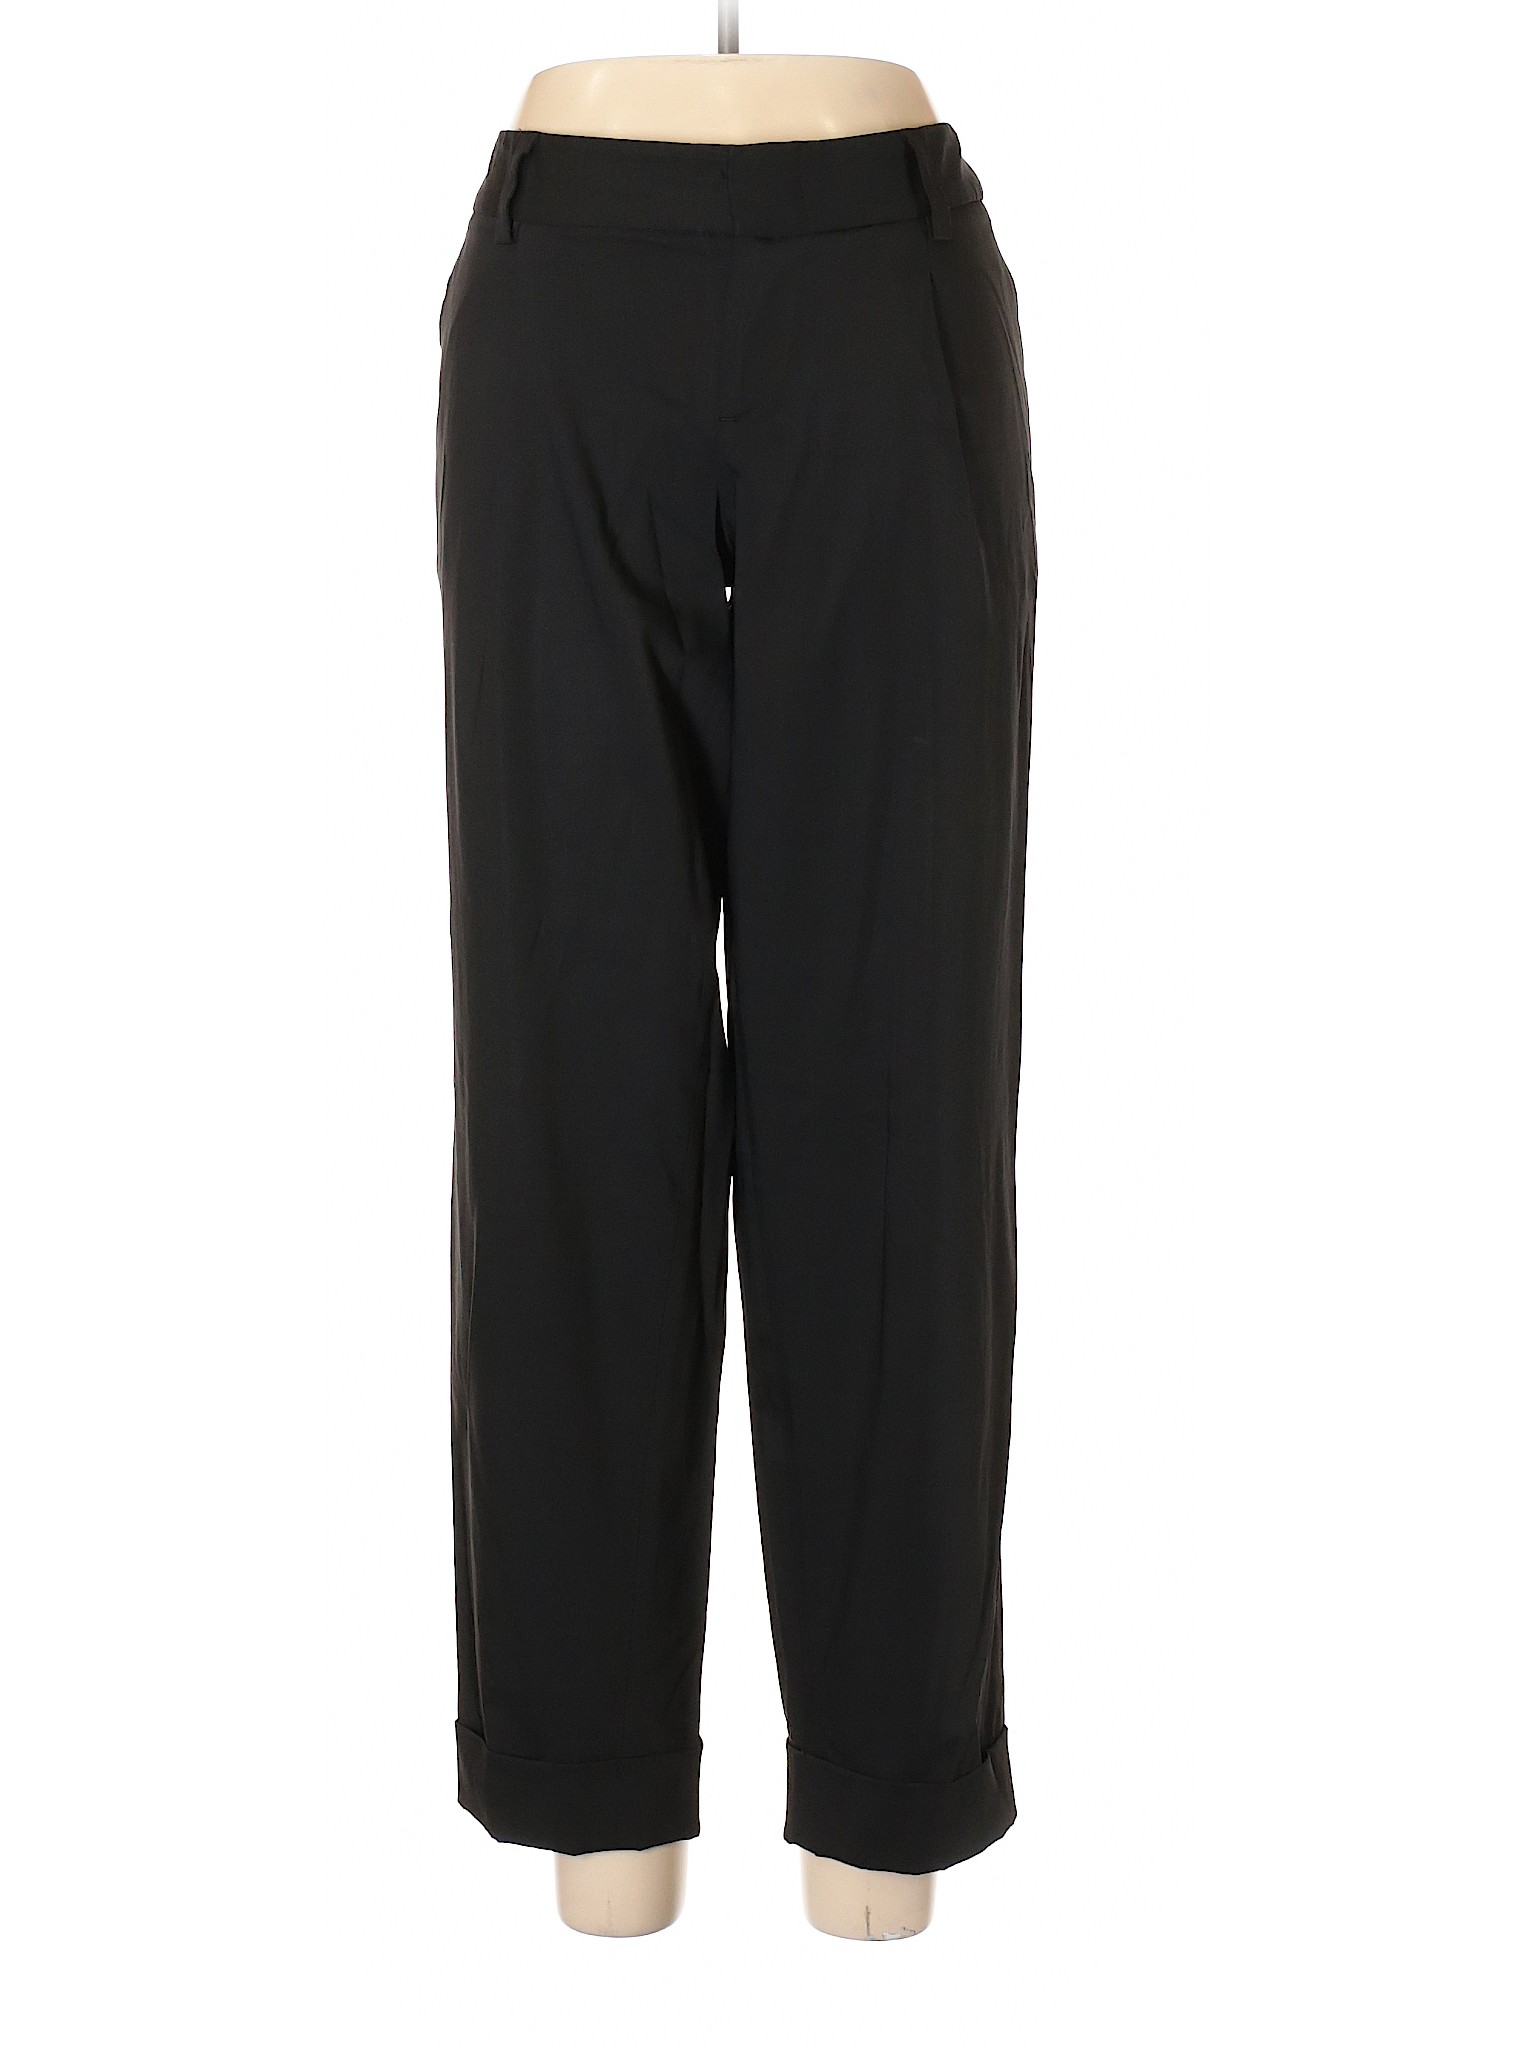 Alice + Olivia Solid Black Wool Pants Size 10 - 90% off | thredUP